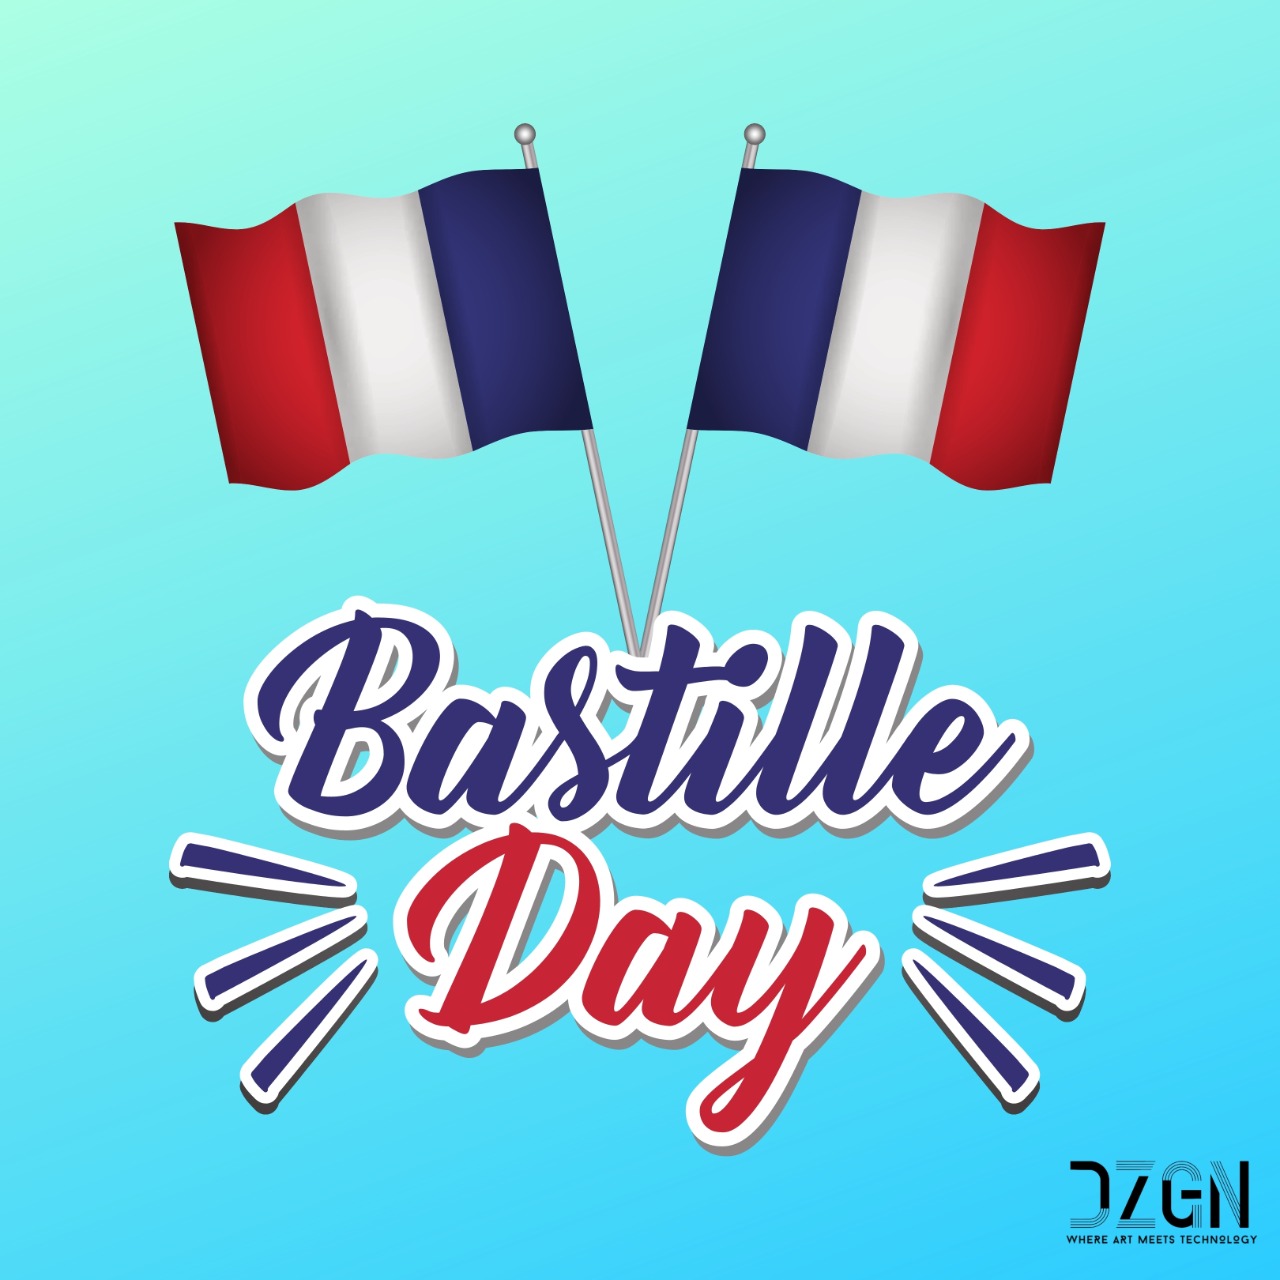 bastille-day/9